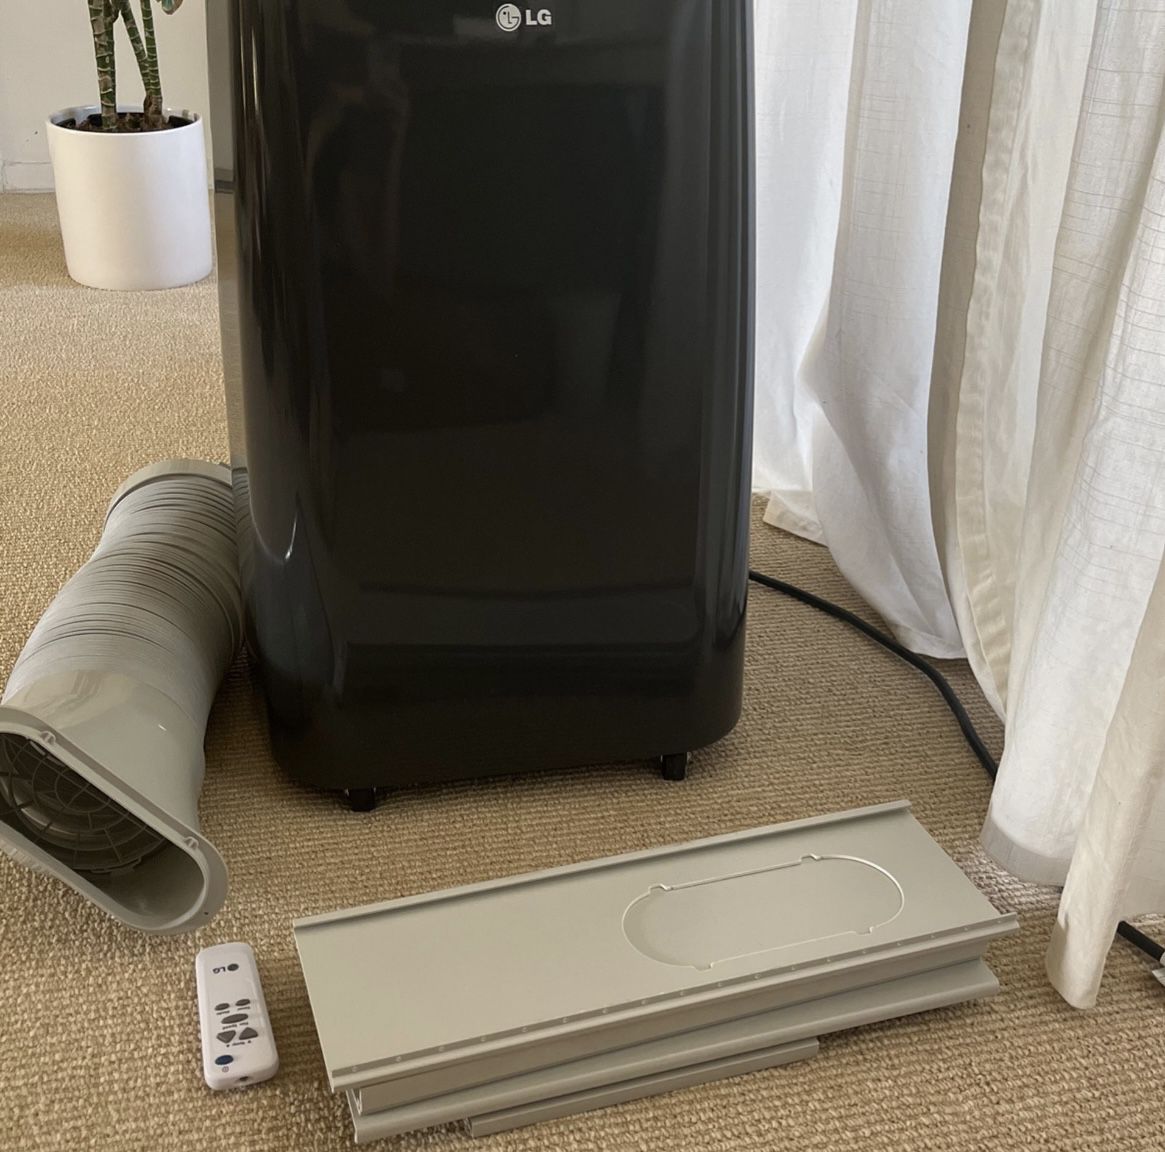 LG Portable Air Conditioner with Remote 12,000 BTU 